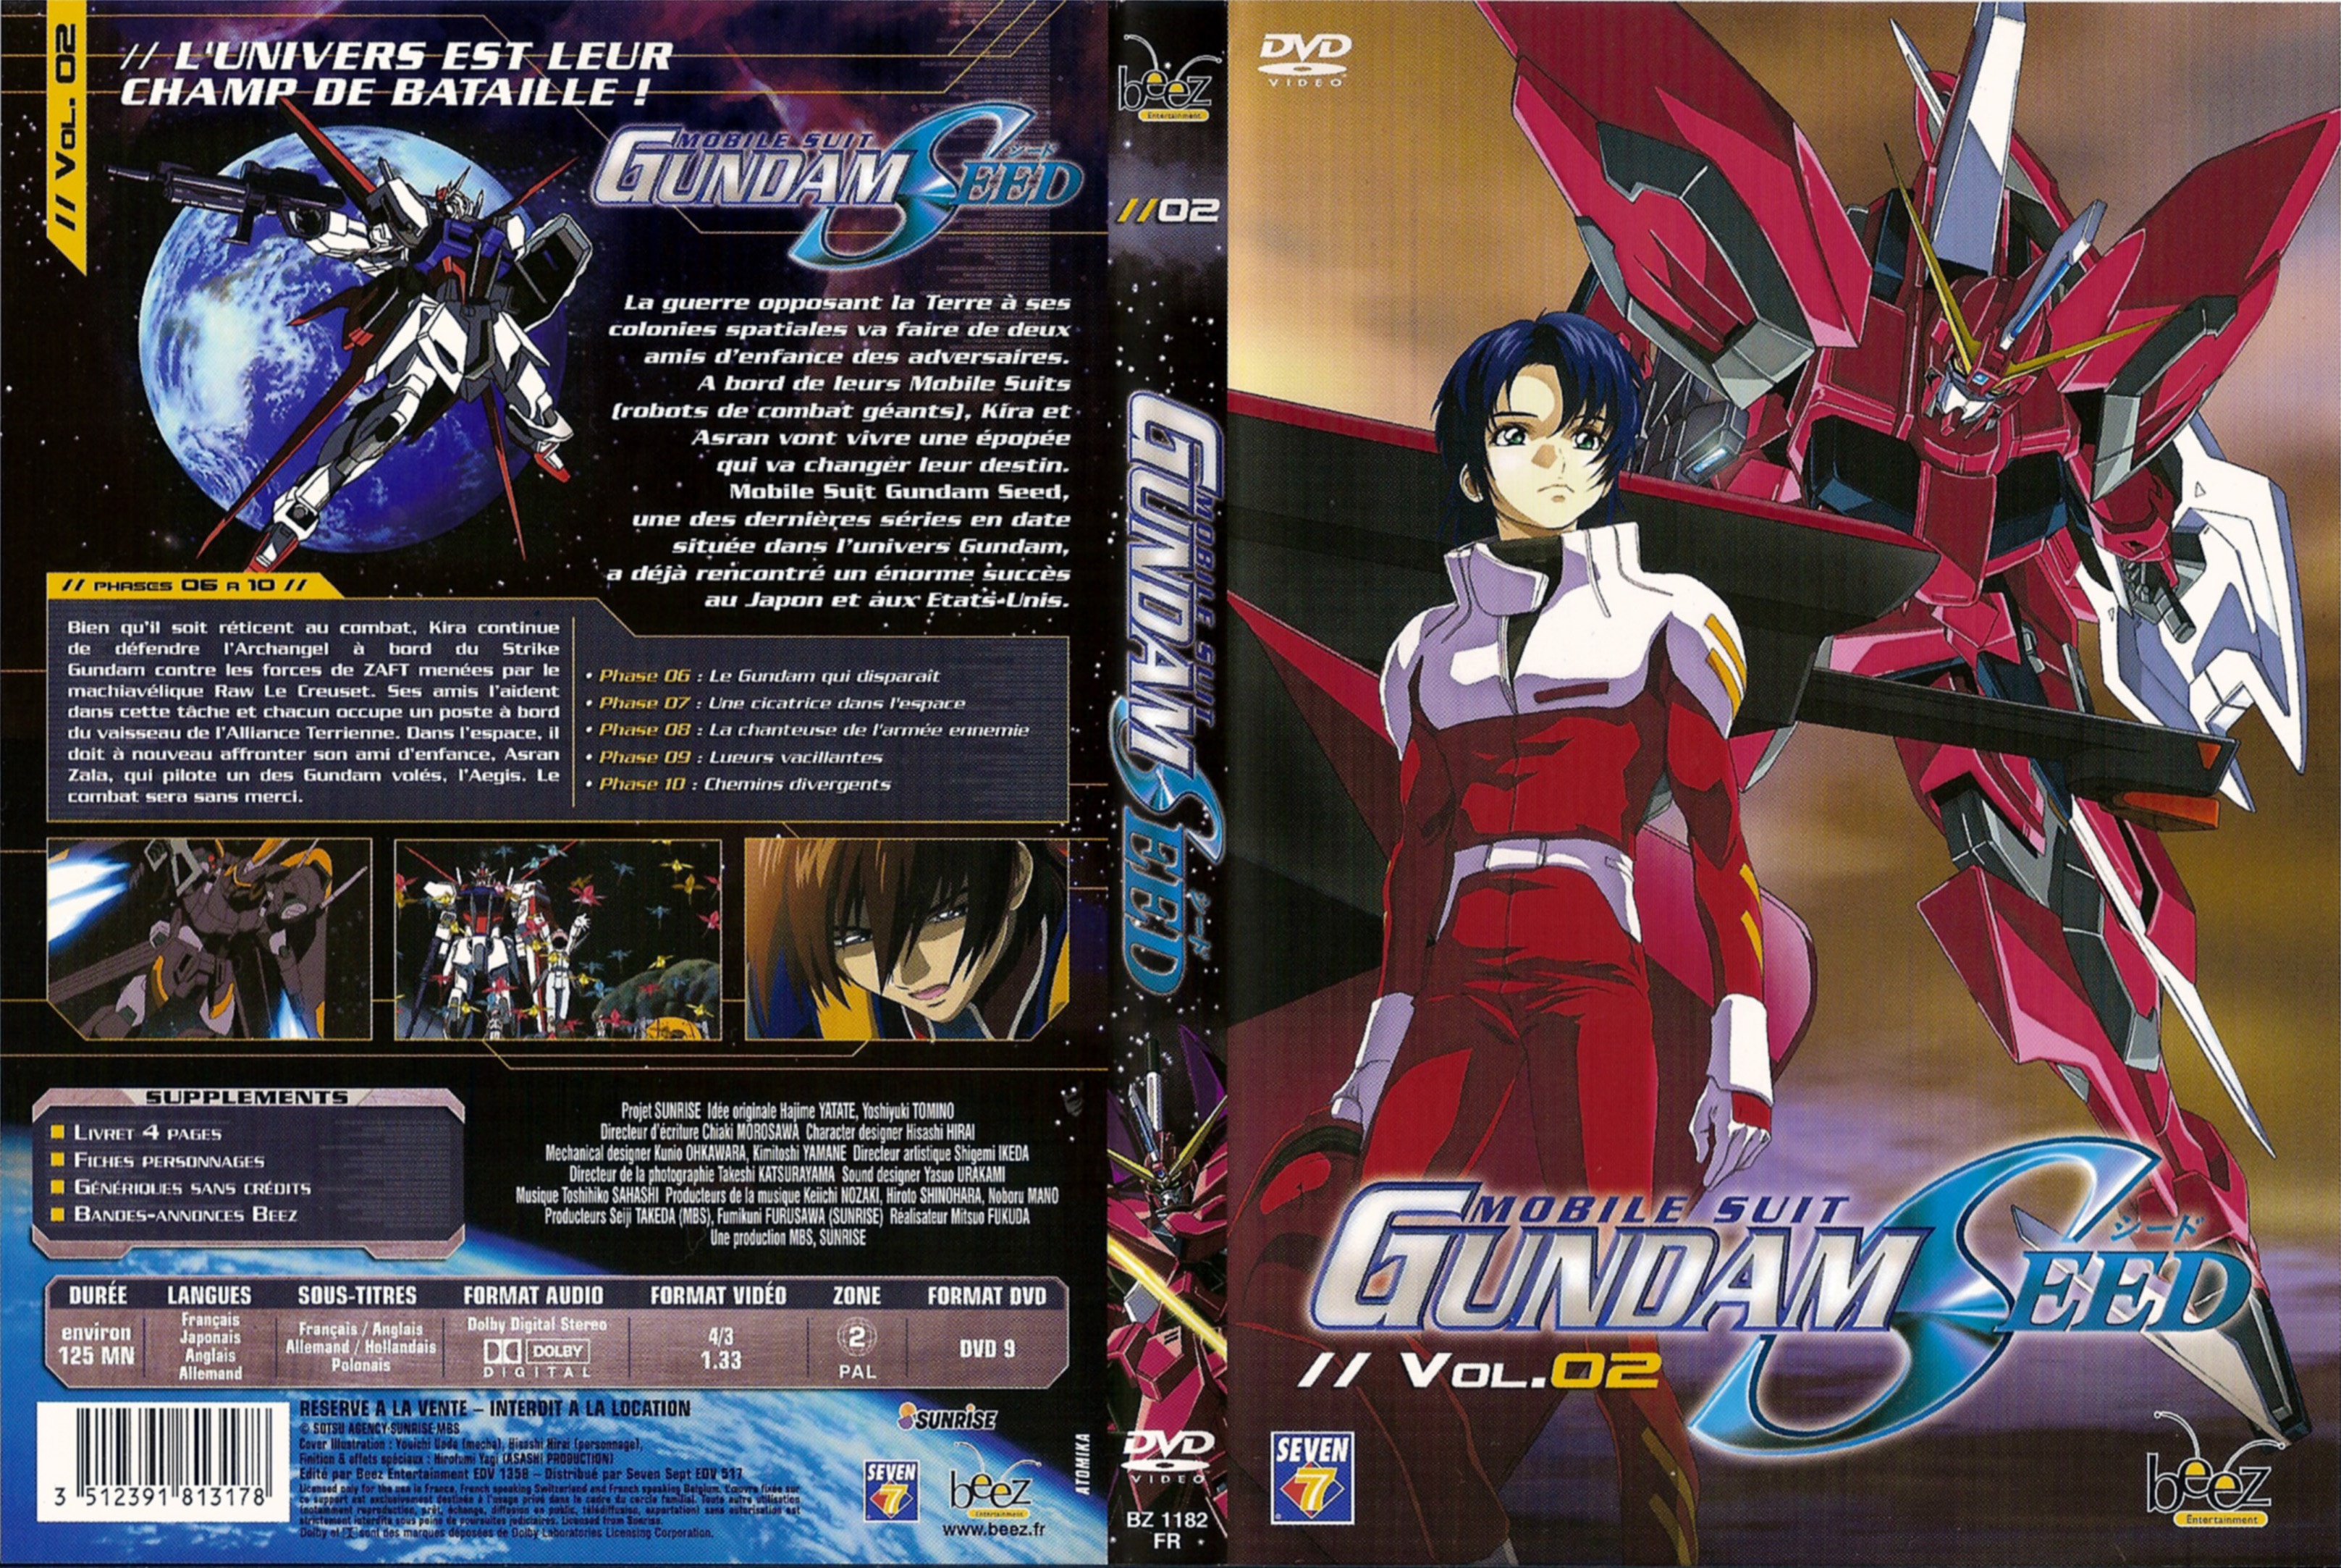 Jaquette DVD Gundam seed vol 02